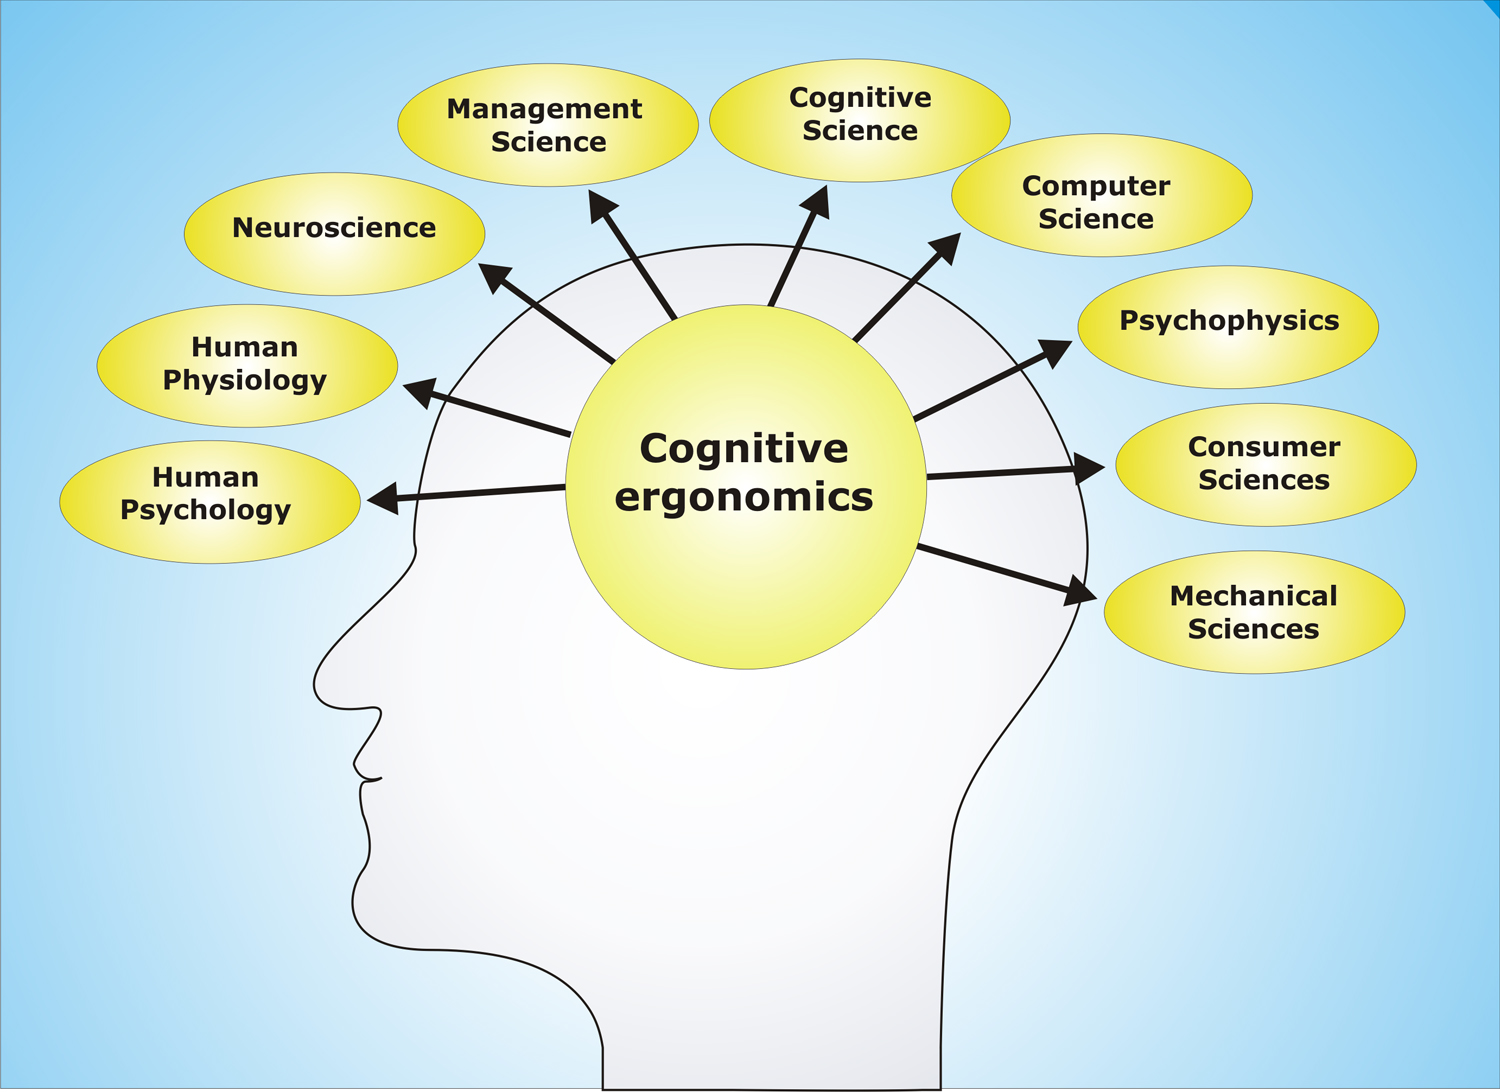 Ergonomics: User centered product design around human factors